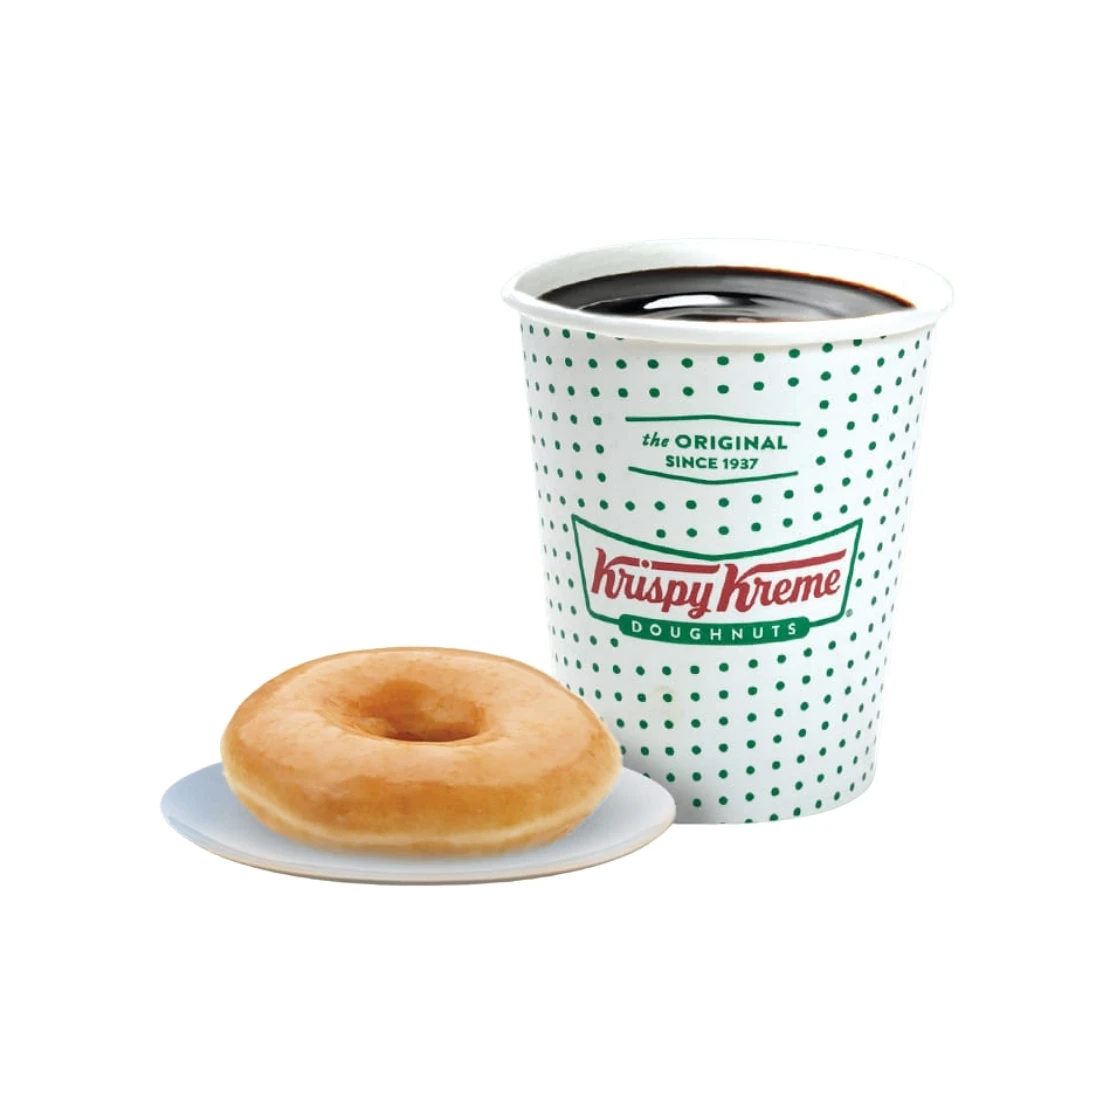 Free doughnut for every medium-sized drink